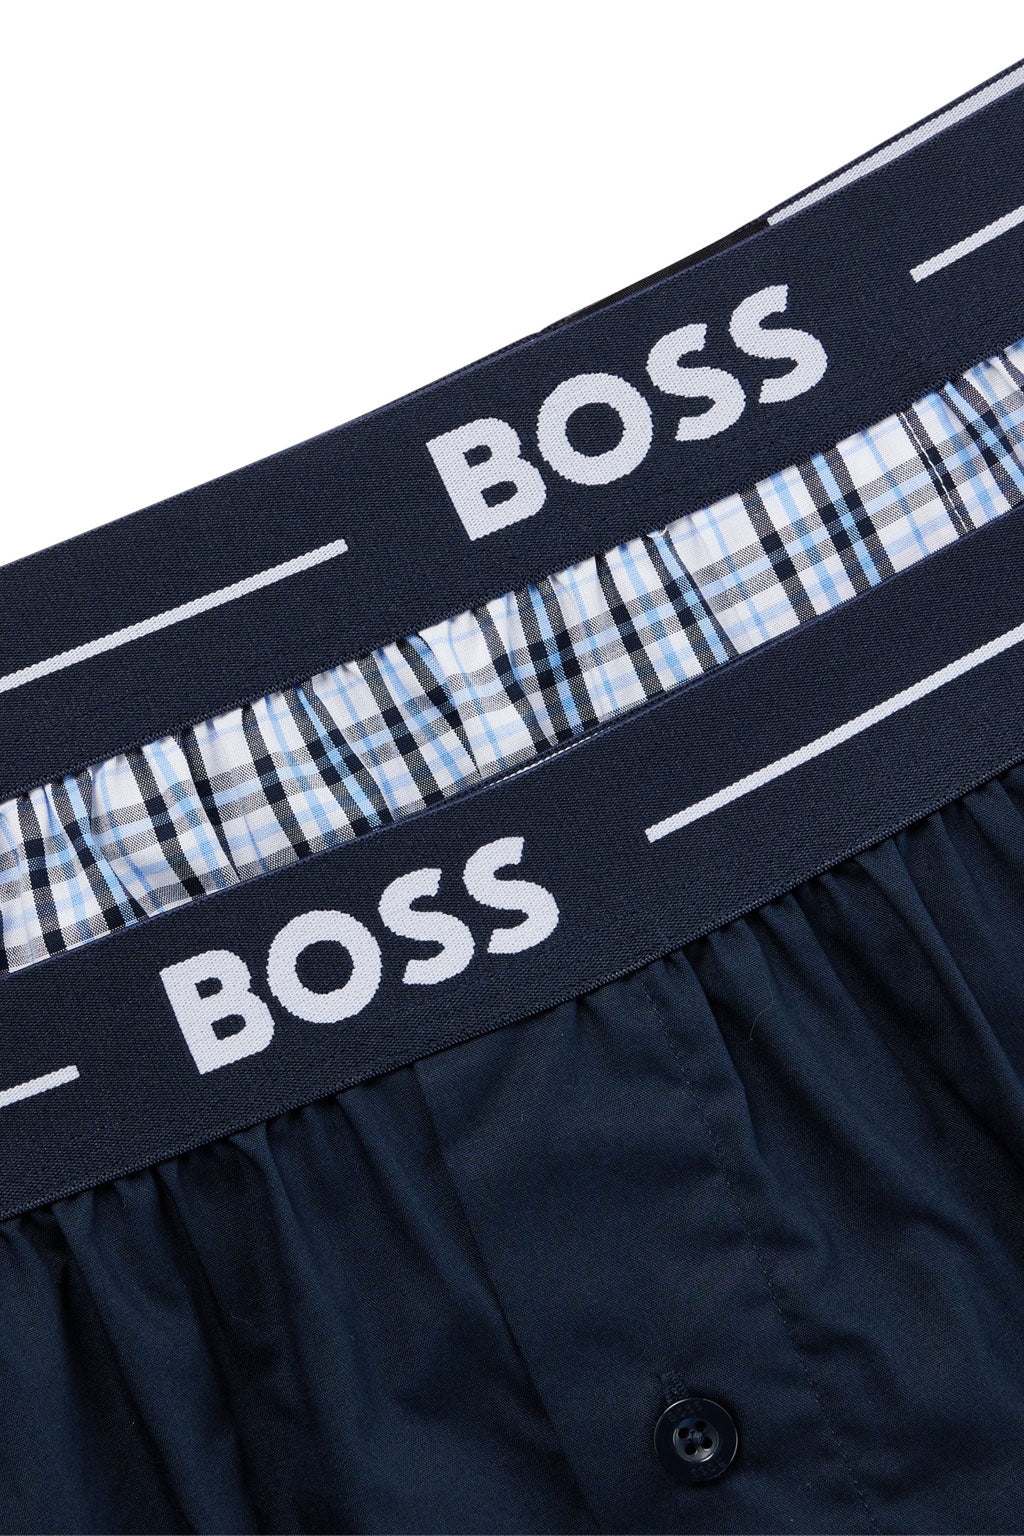 Hugo Boss underwear